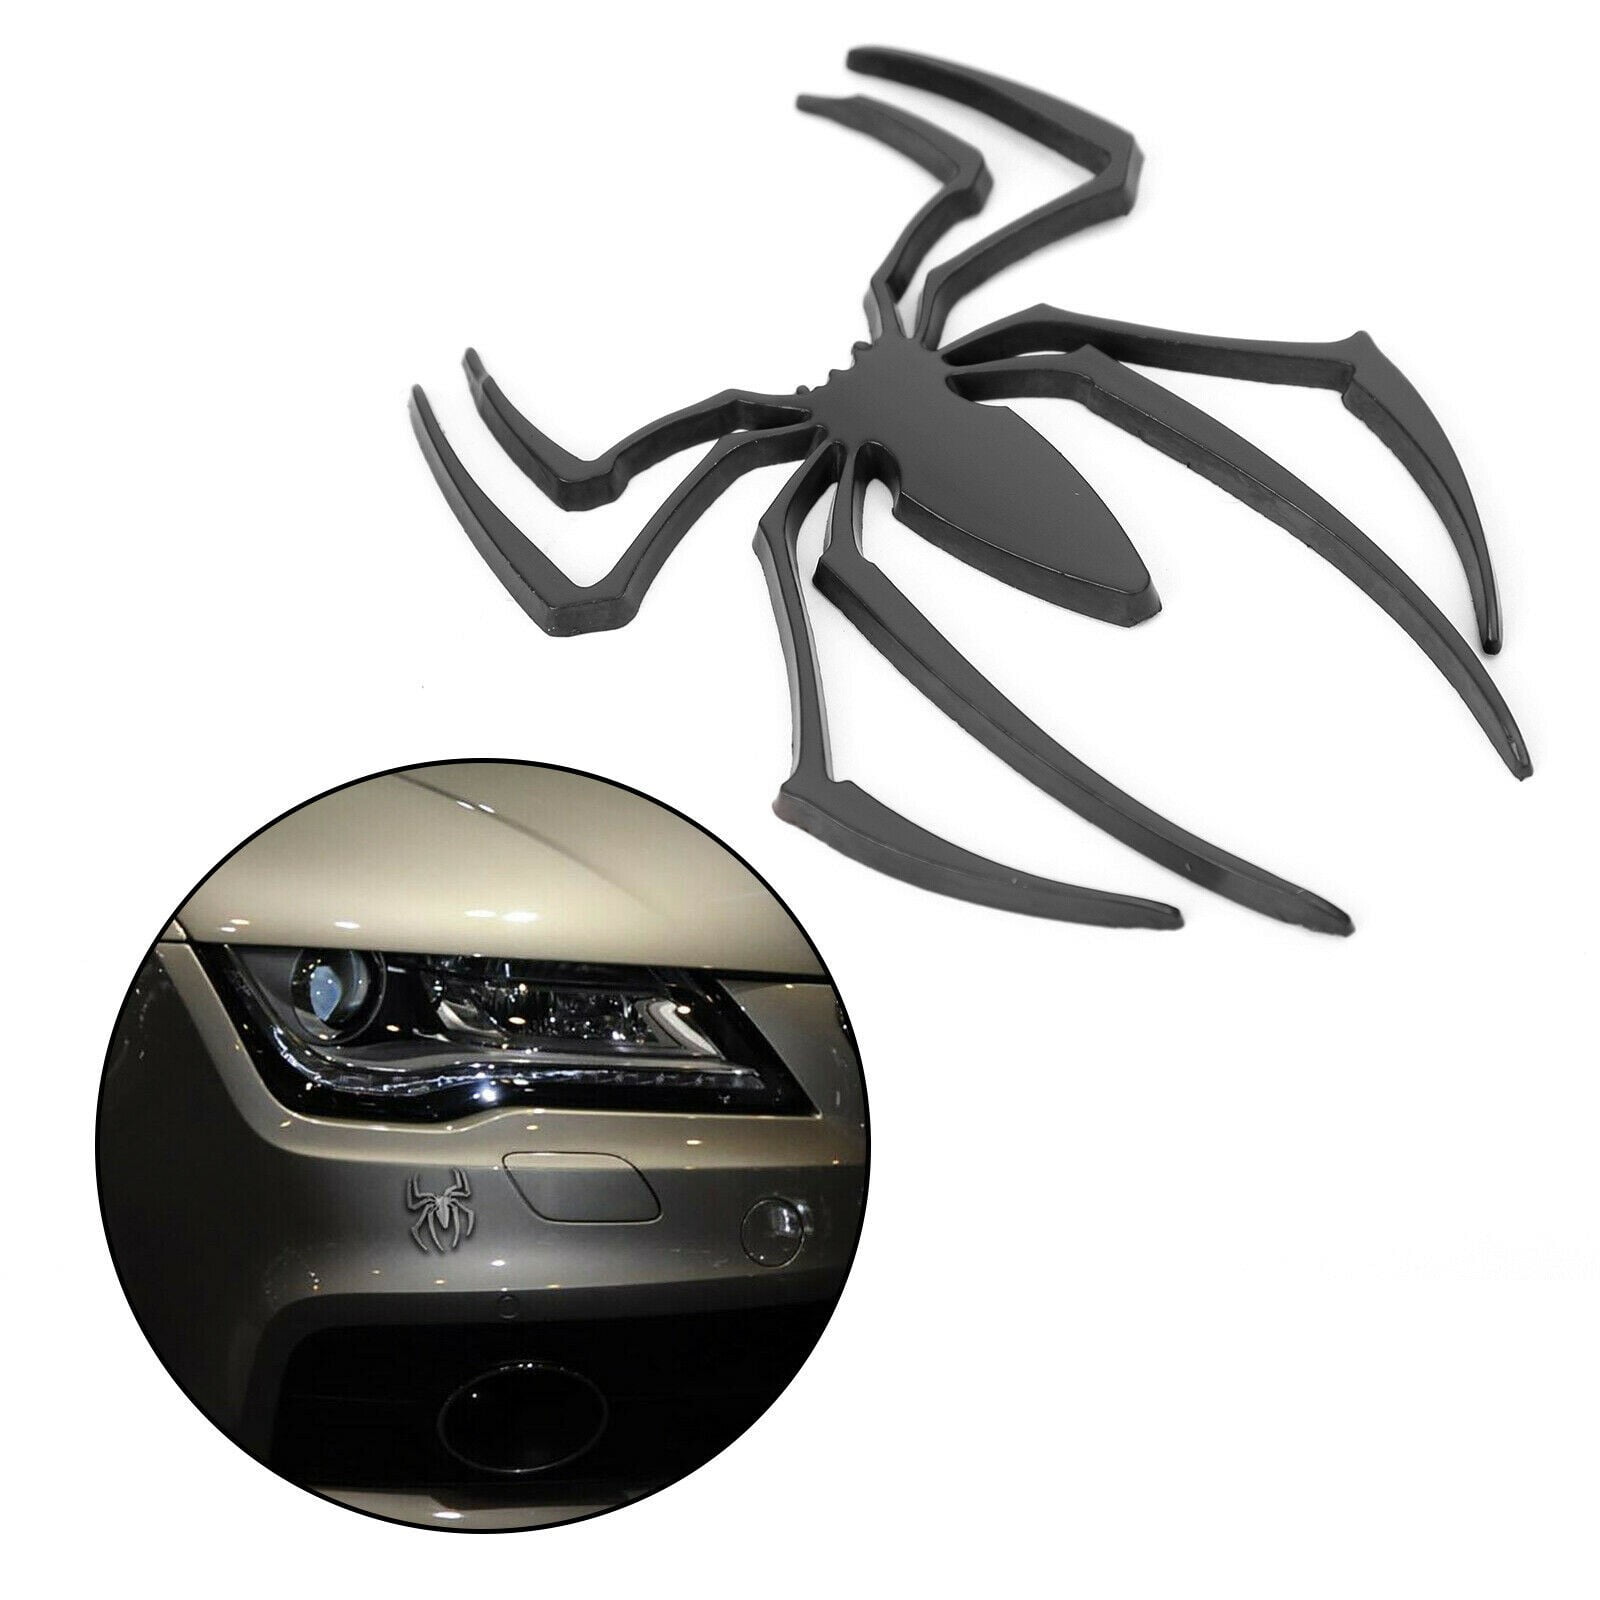 2 pcs Metal SUV Car Vehicle Silver Chrome Spider Badge Emblem Logo Decal Sticker 